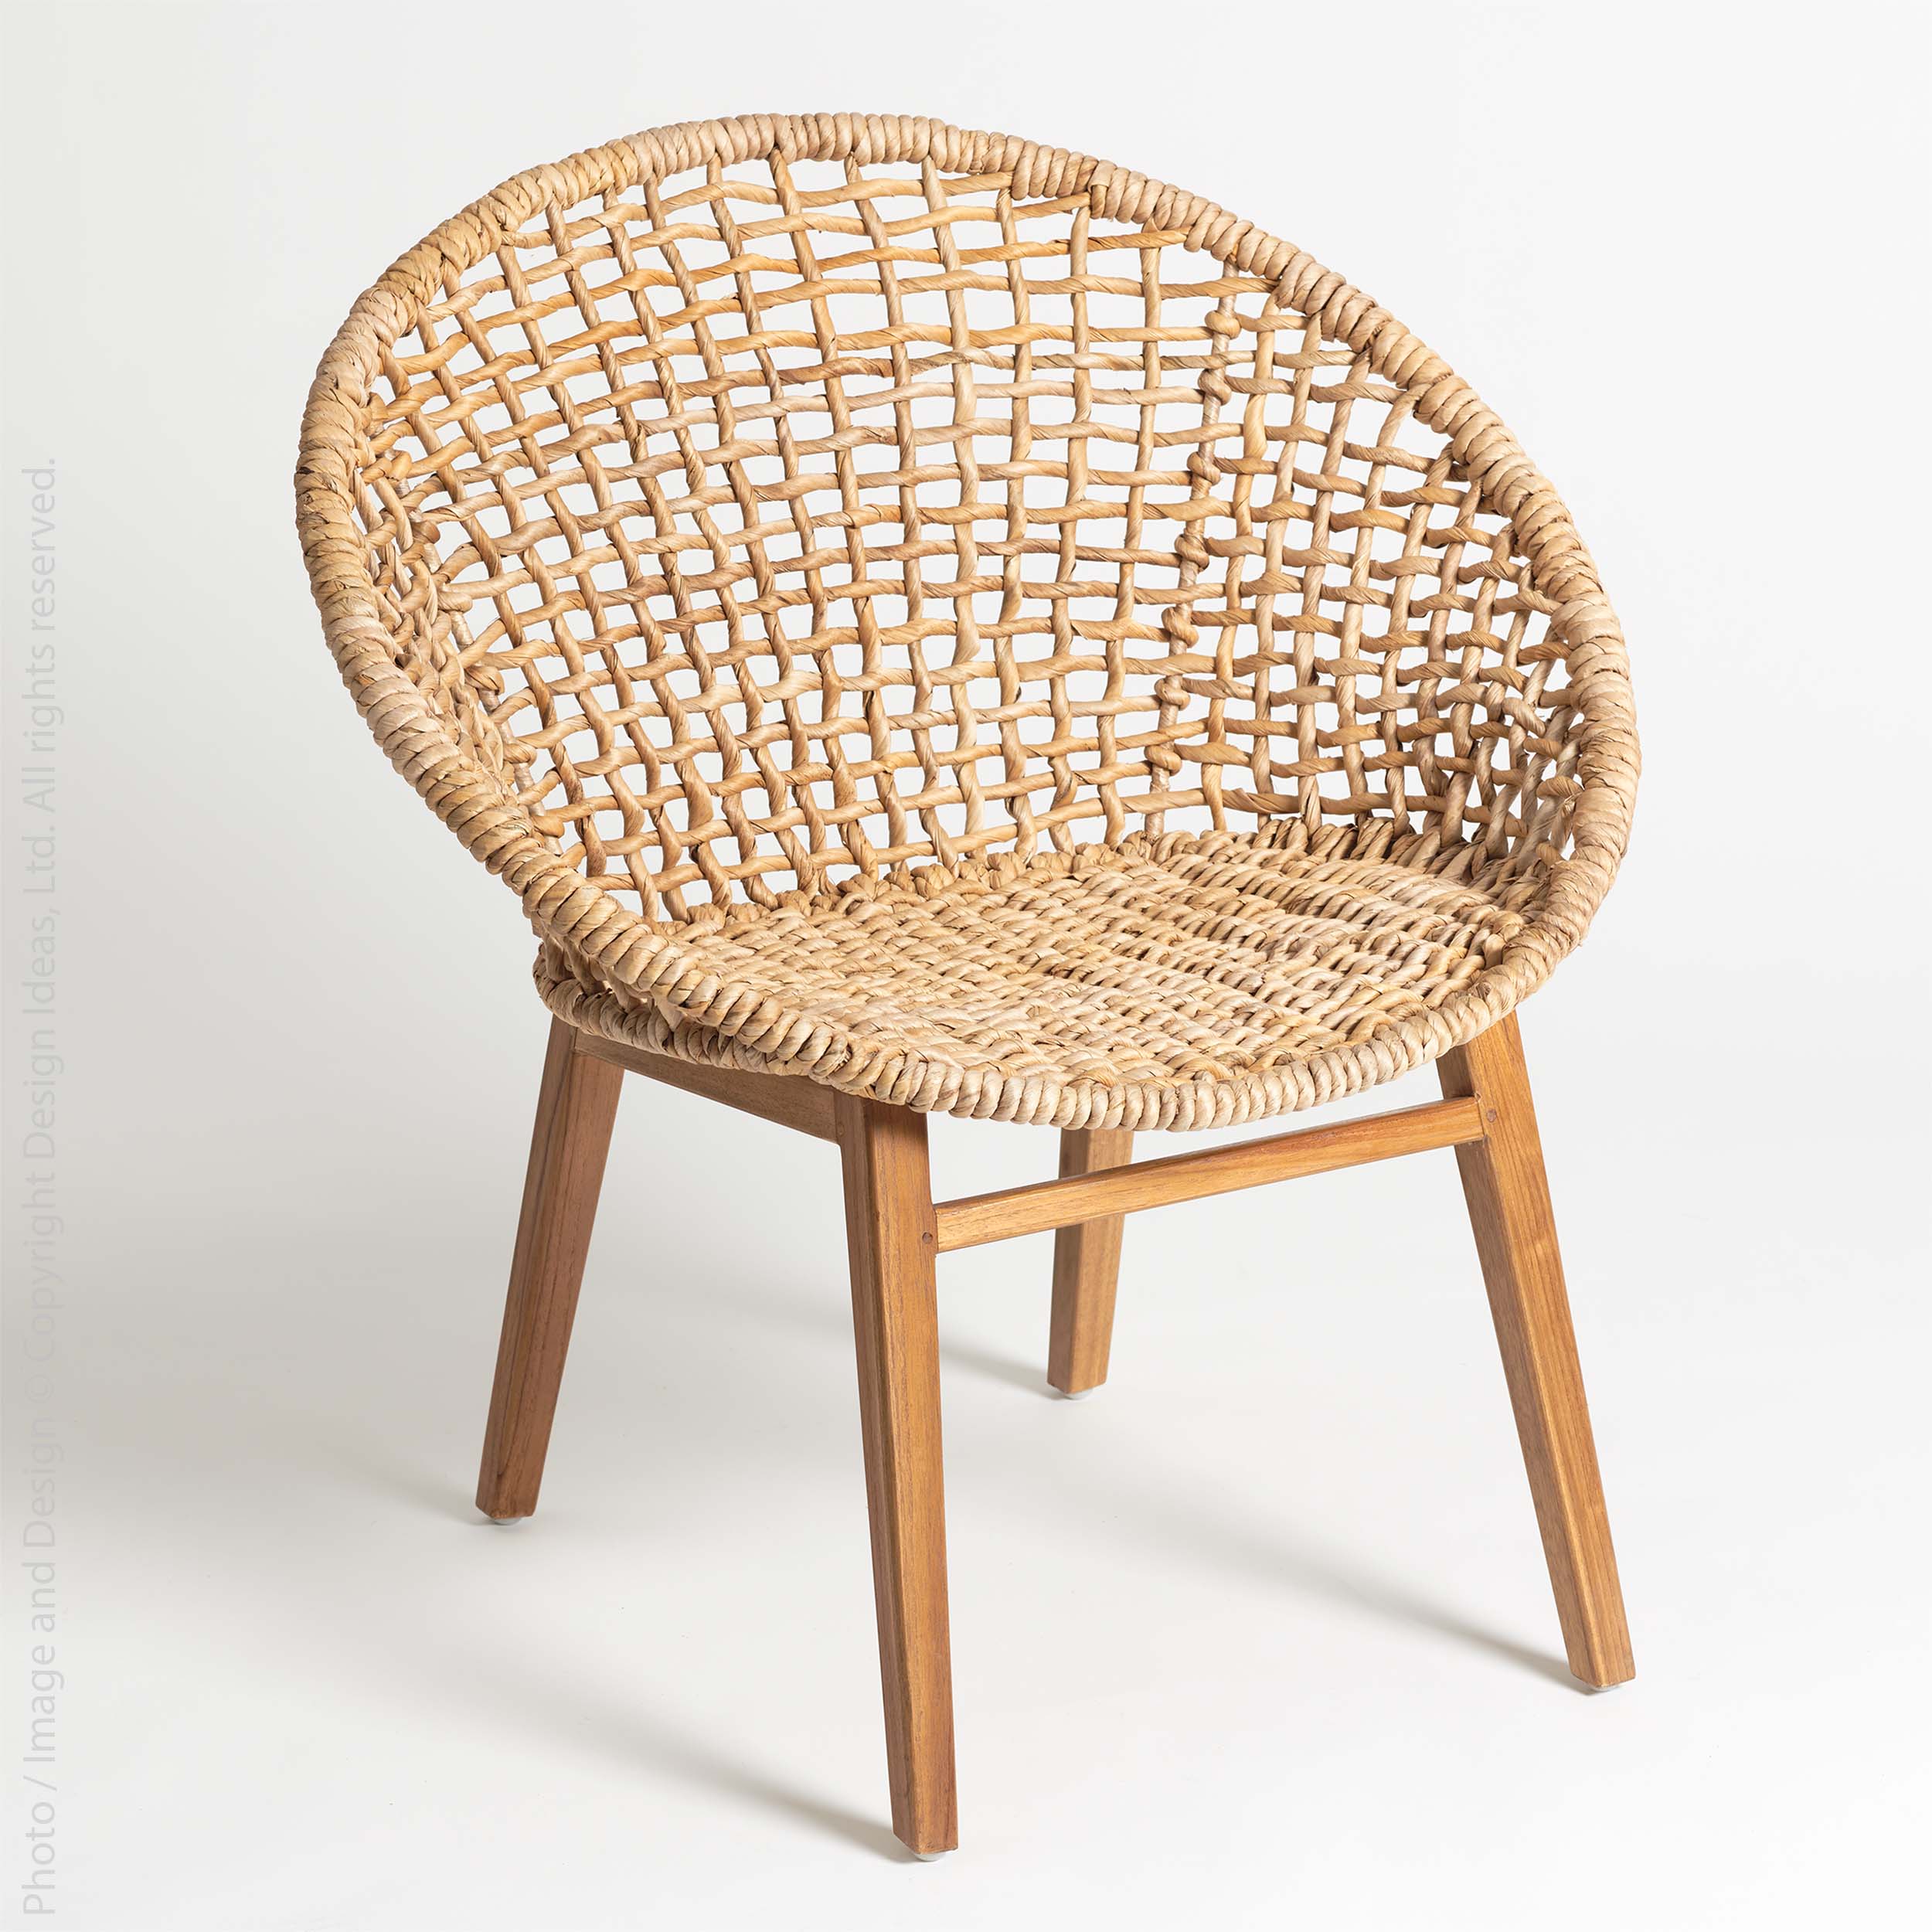 Paloma™ Abaca, wood and iron chair